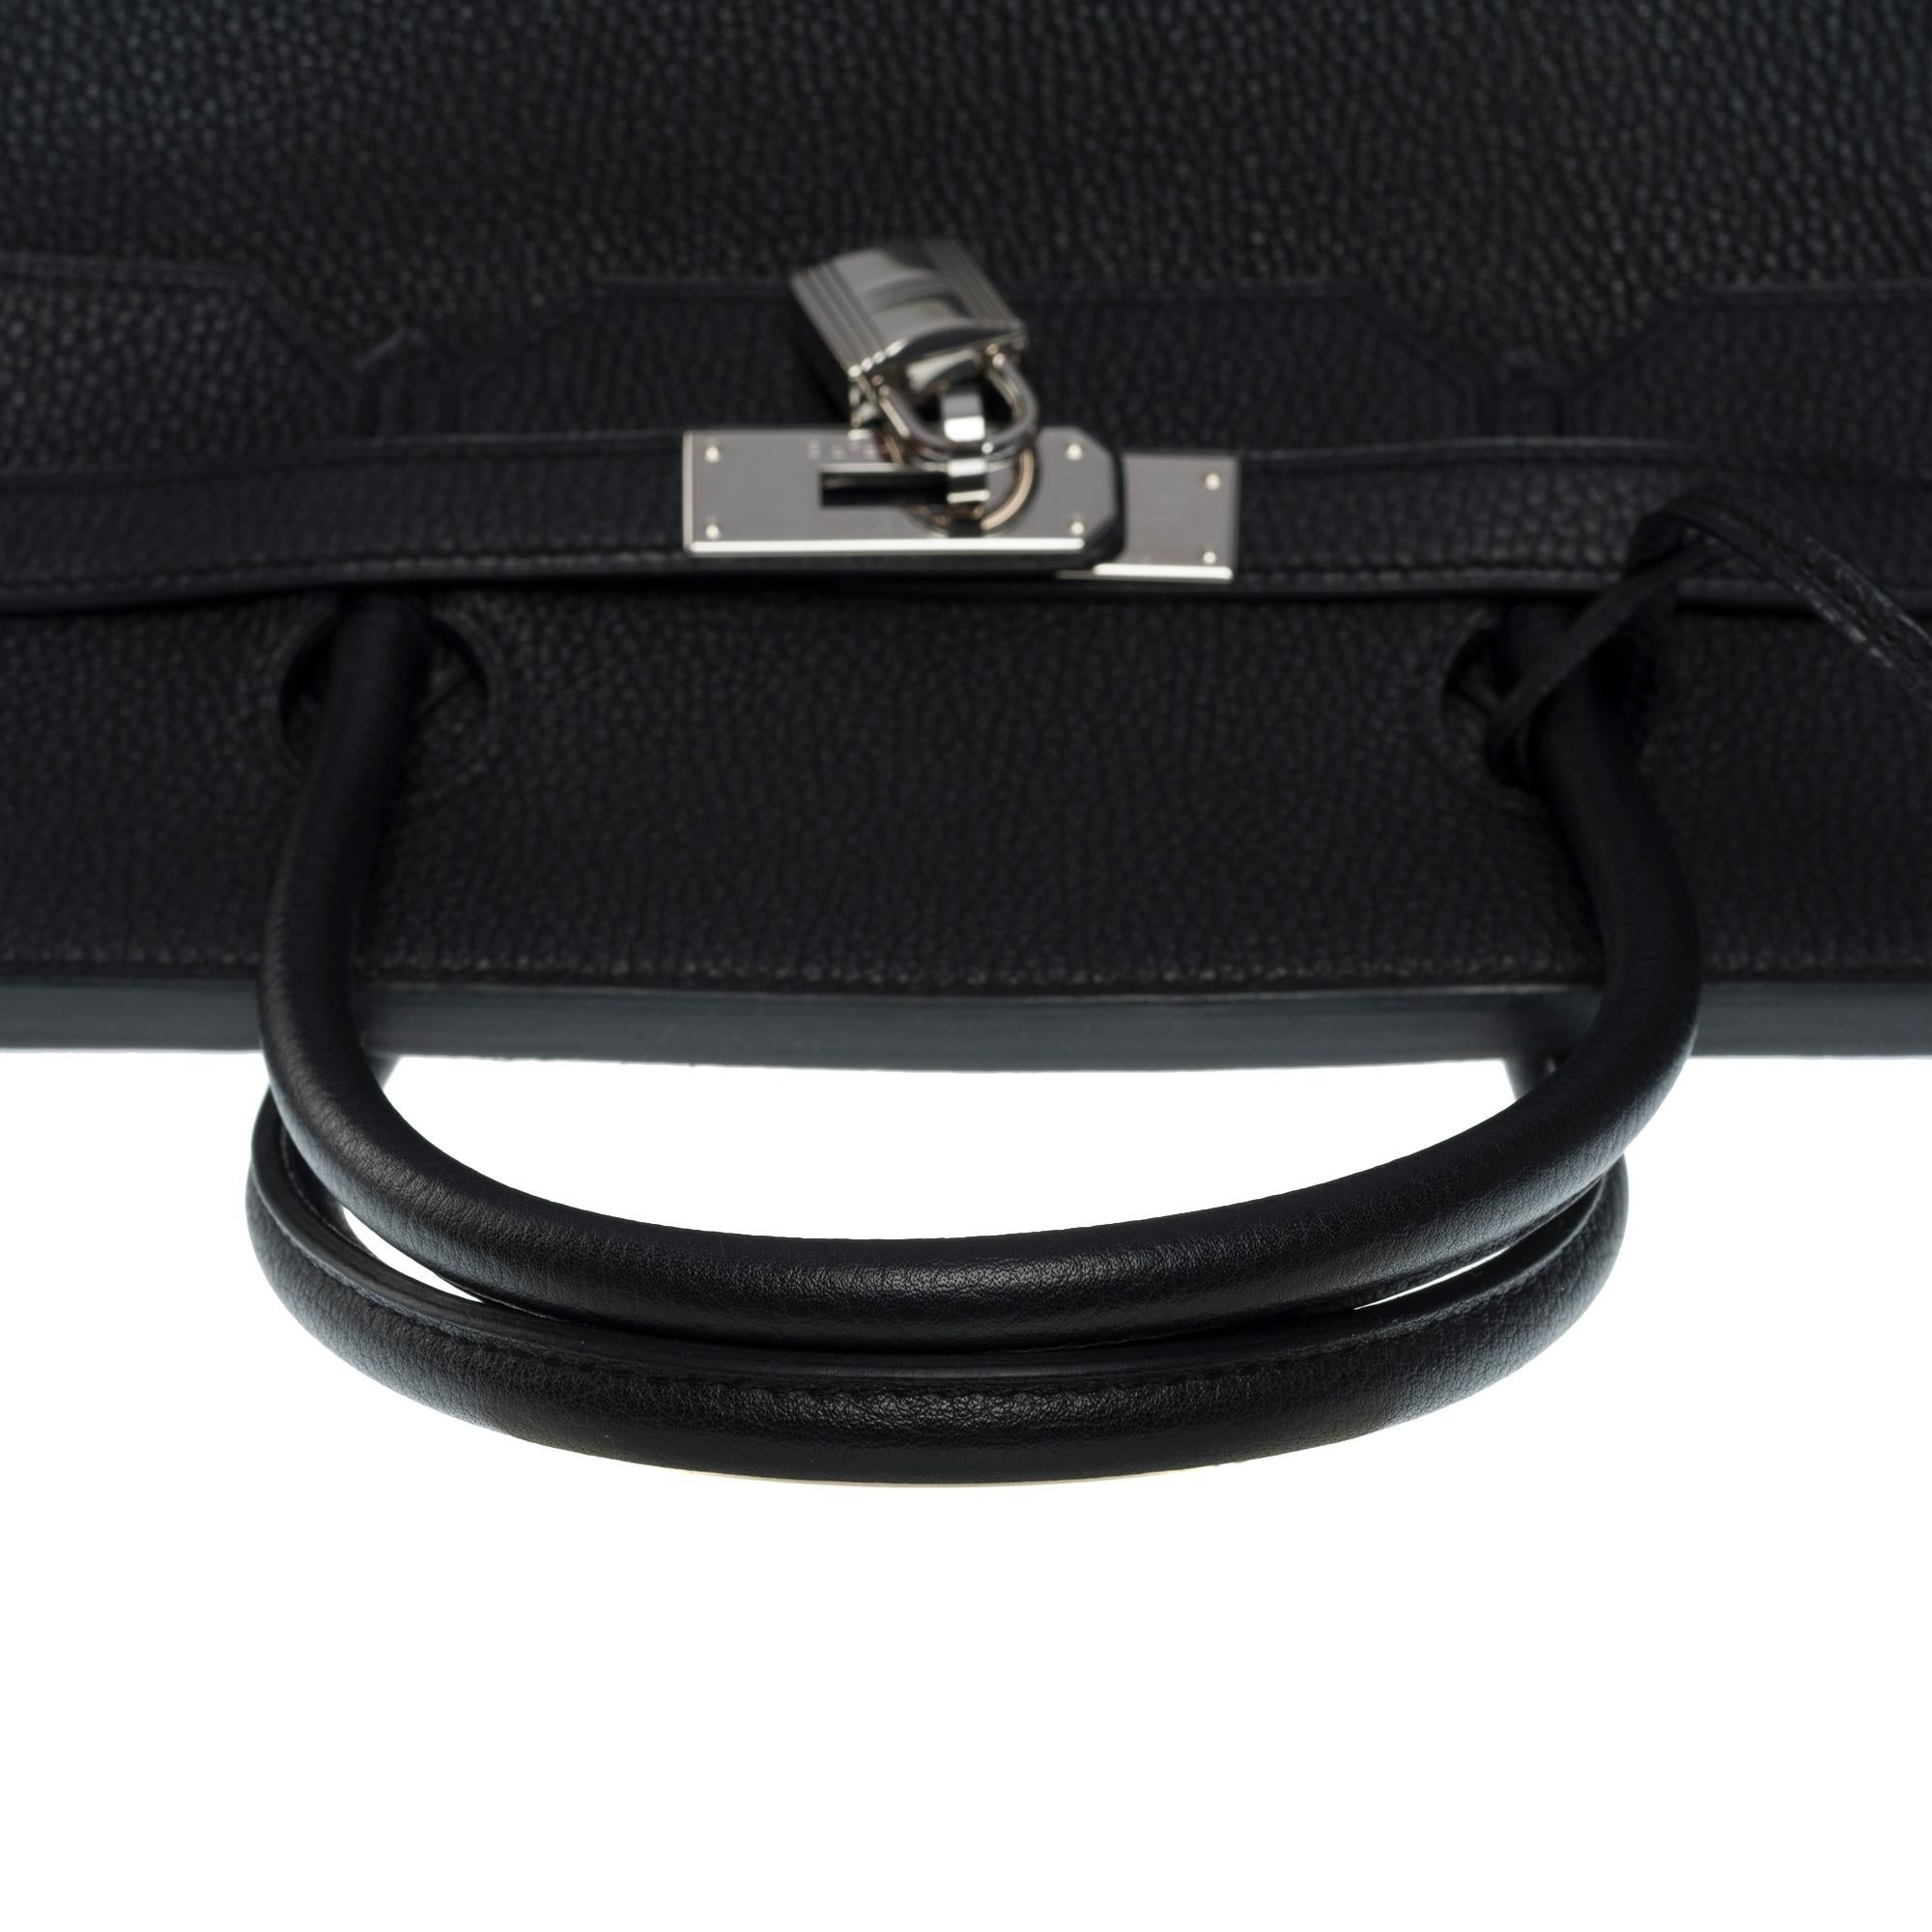 Stunning Hermes Birkin 40cm handbag in Black Togo leather, SHW 4